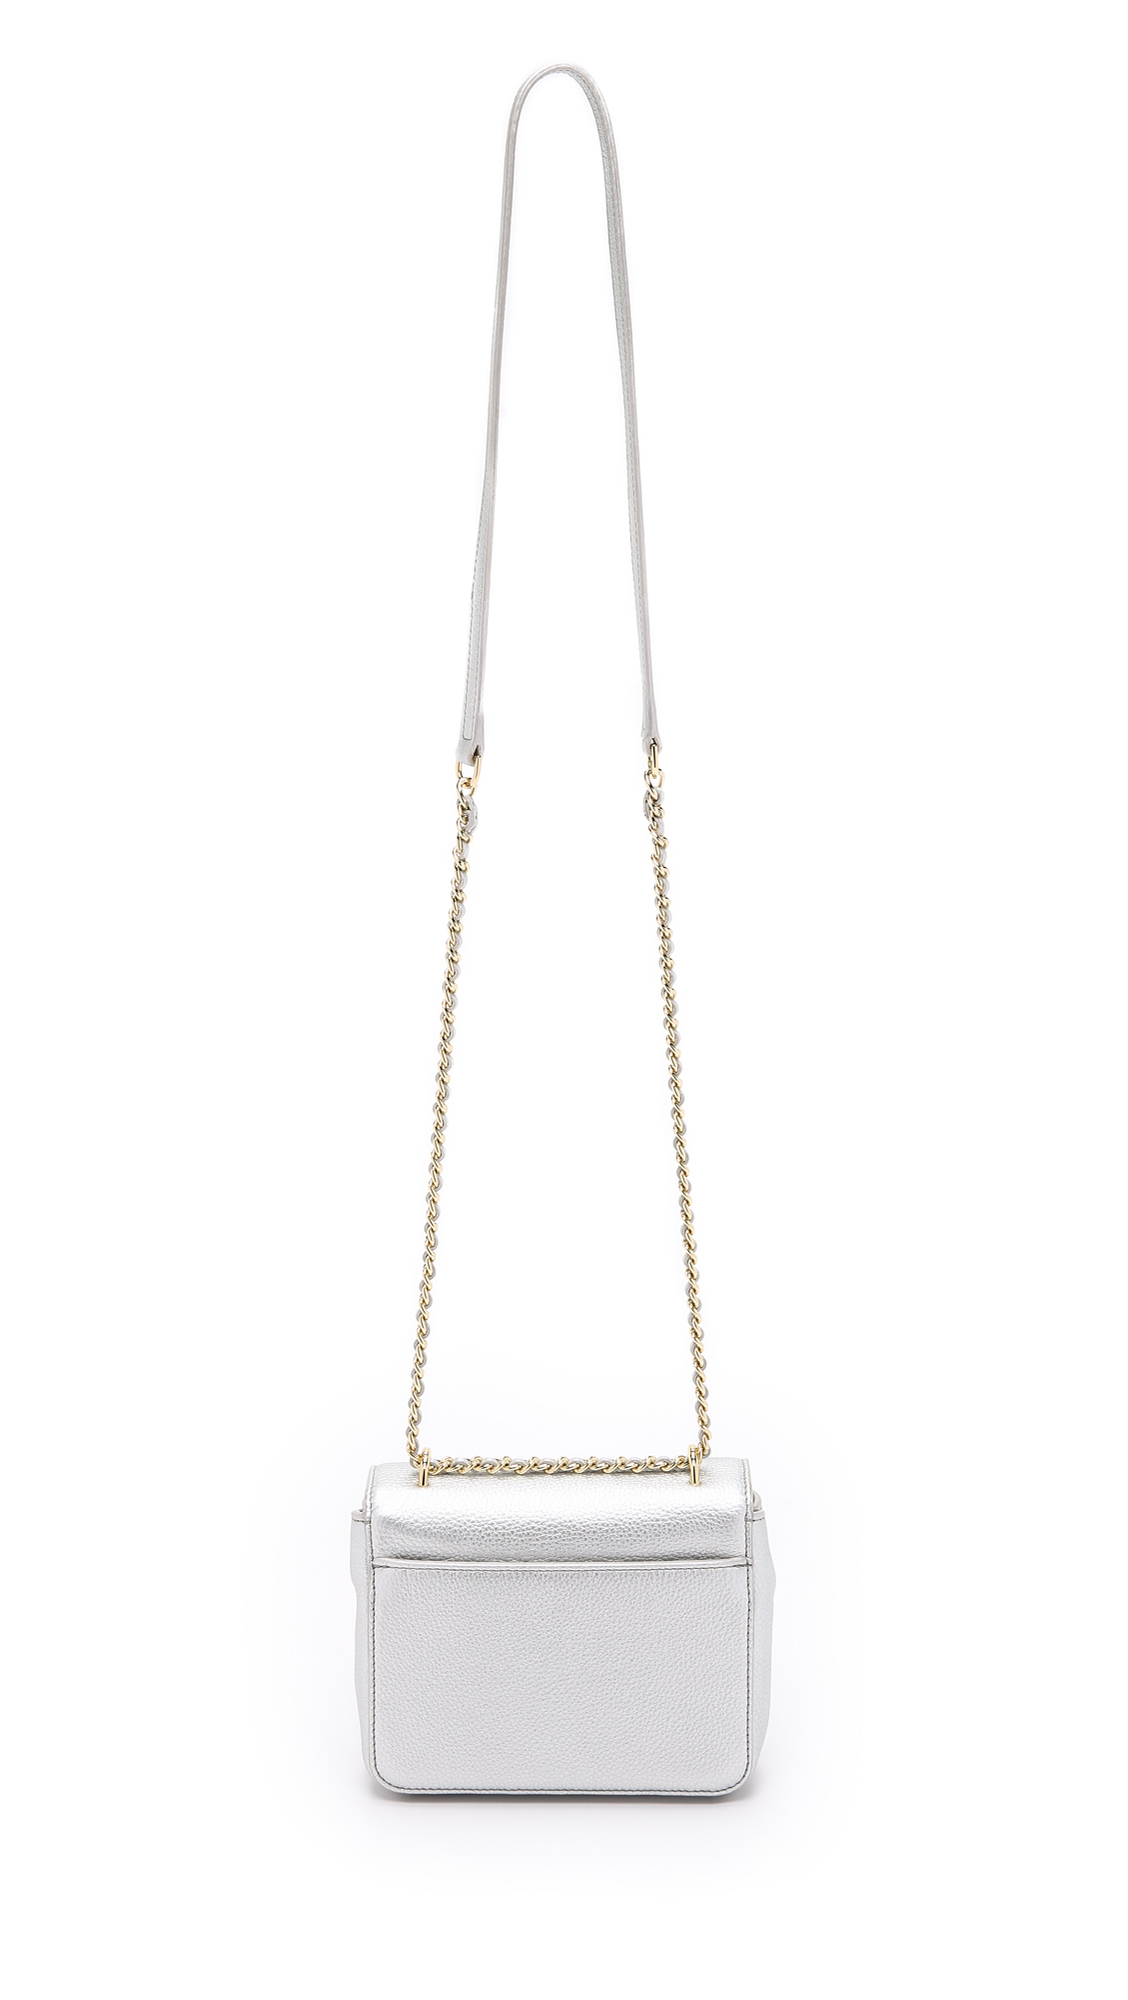 Tory Burch Kira Metallic Mini Chain Cross Body Bag - Soft Silver | Lyst